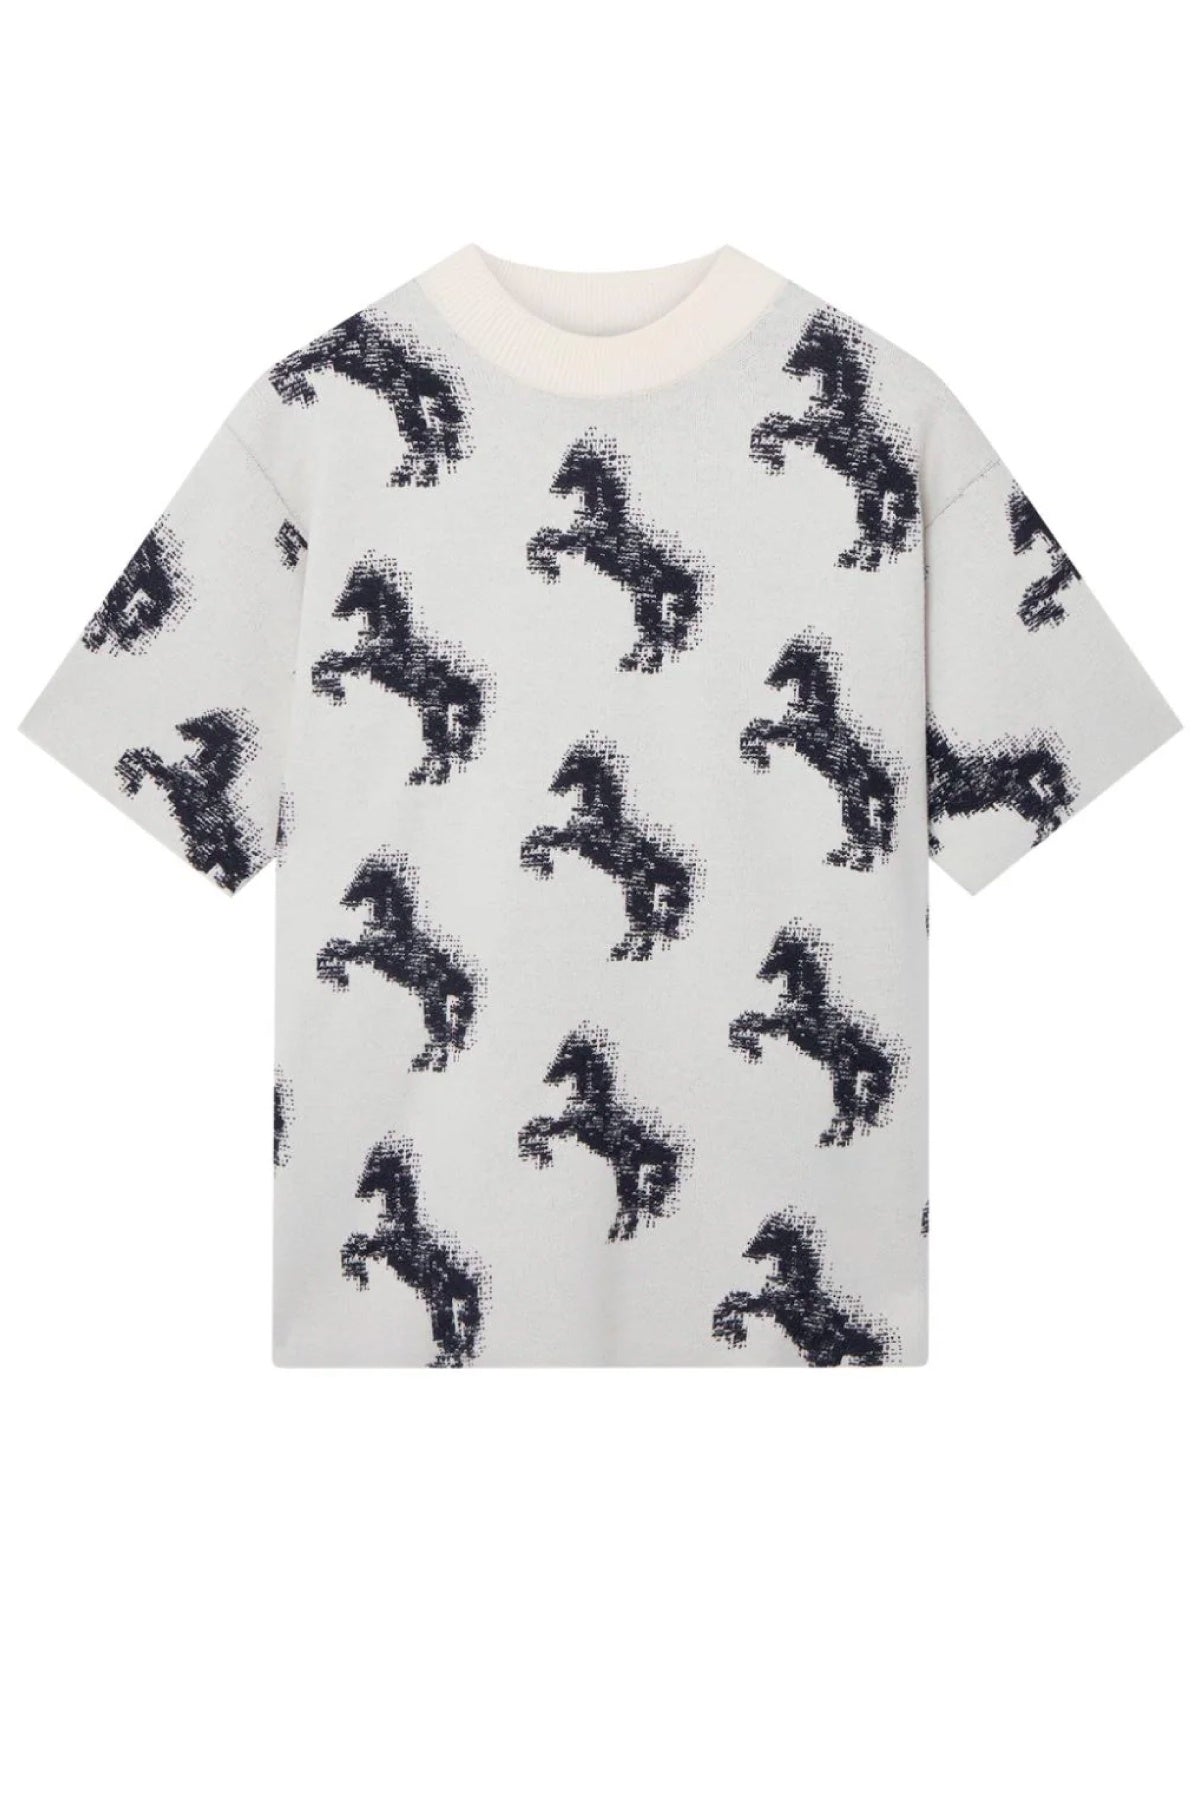 Stella McCartney Pixel Horse Jacquard T-Shirt - Ivory